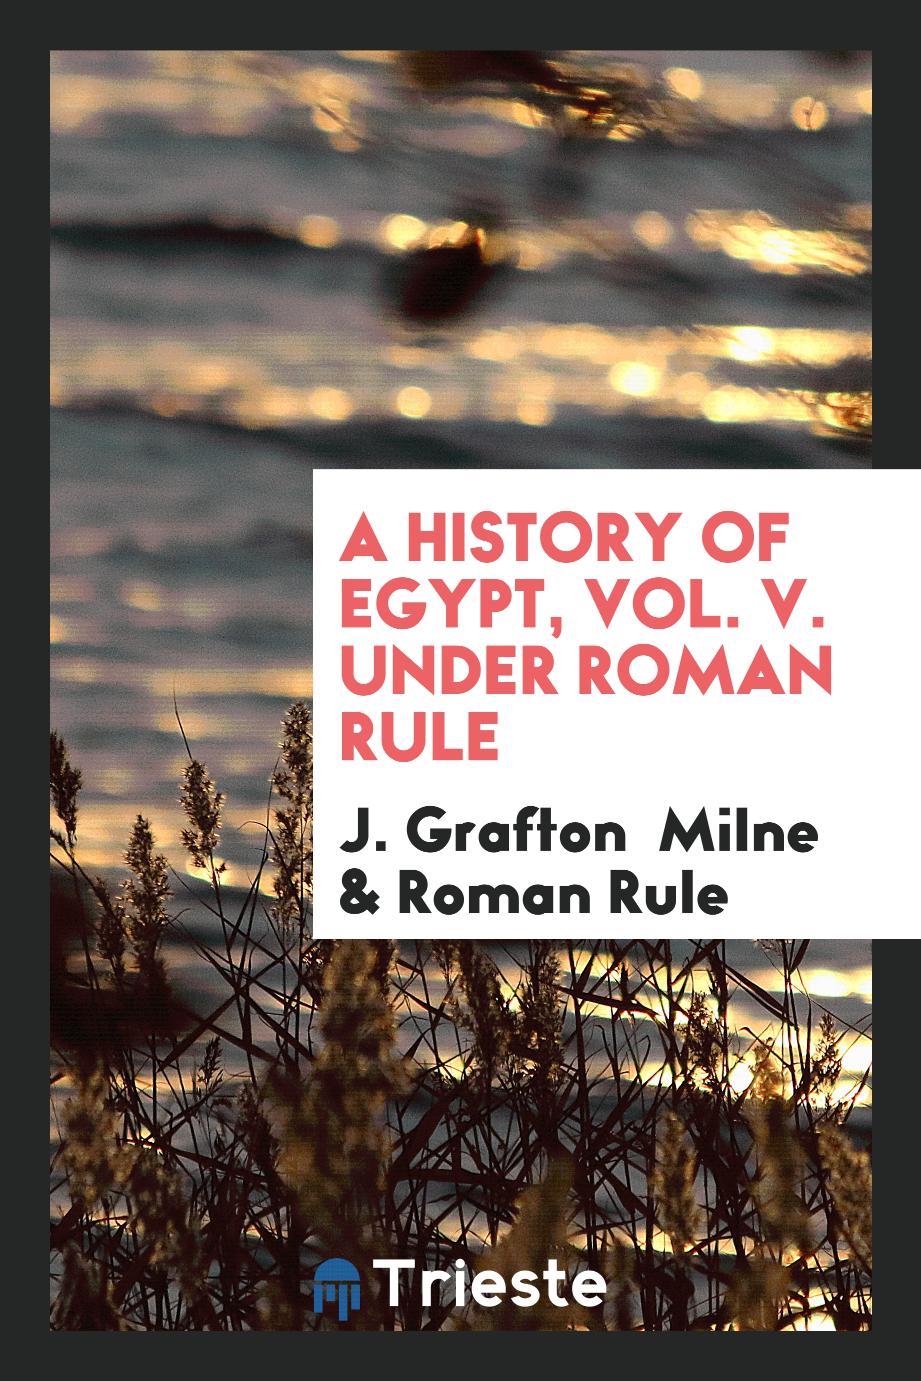 A History of Egypt, Vol. V. Under Roman Rule